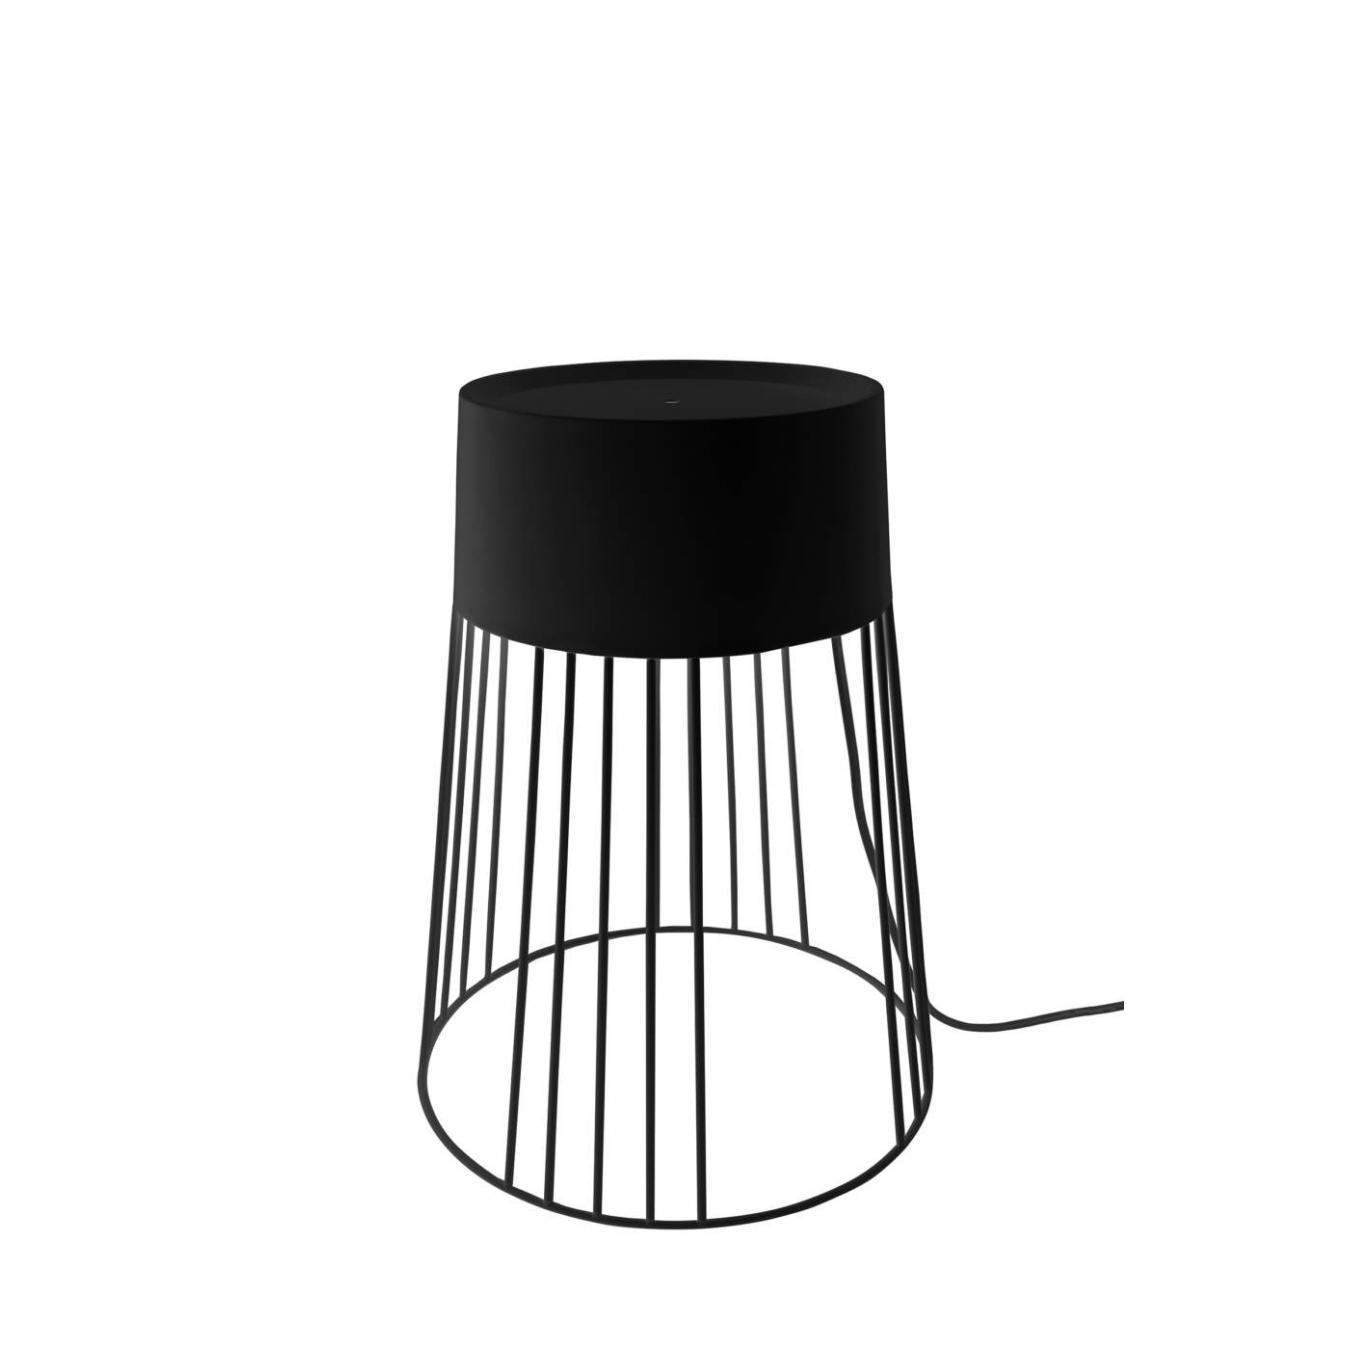 Globen Lighting Koster outdoor floor lamp black // Koster kültéri állólámpa fekete